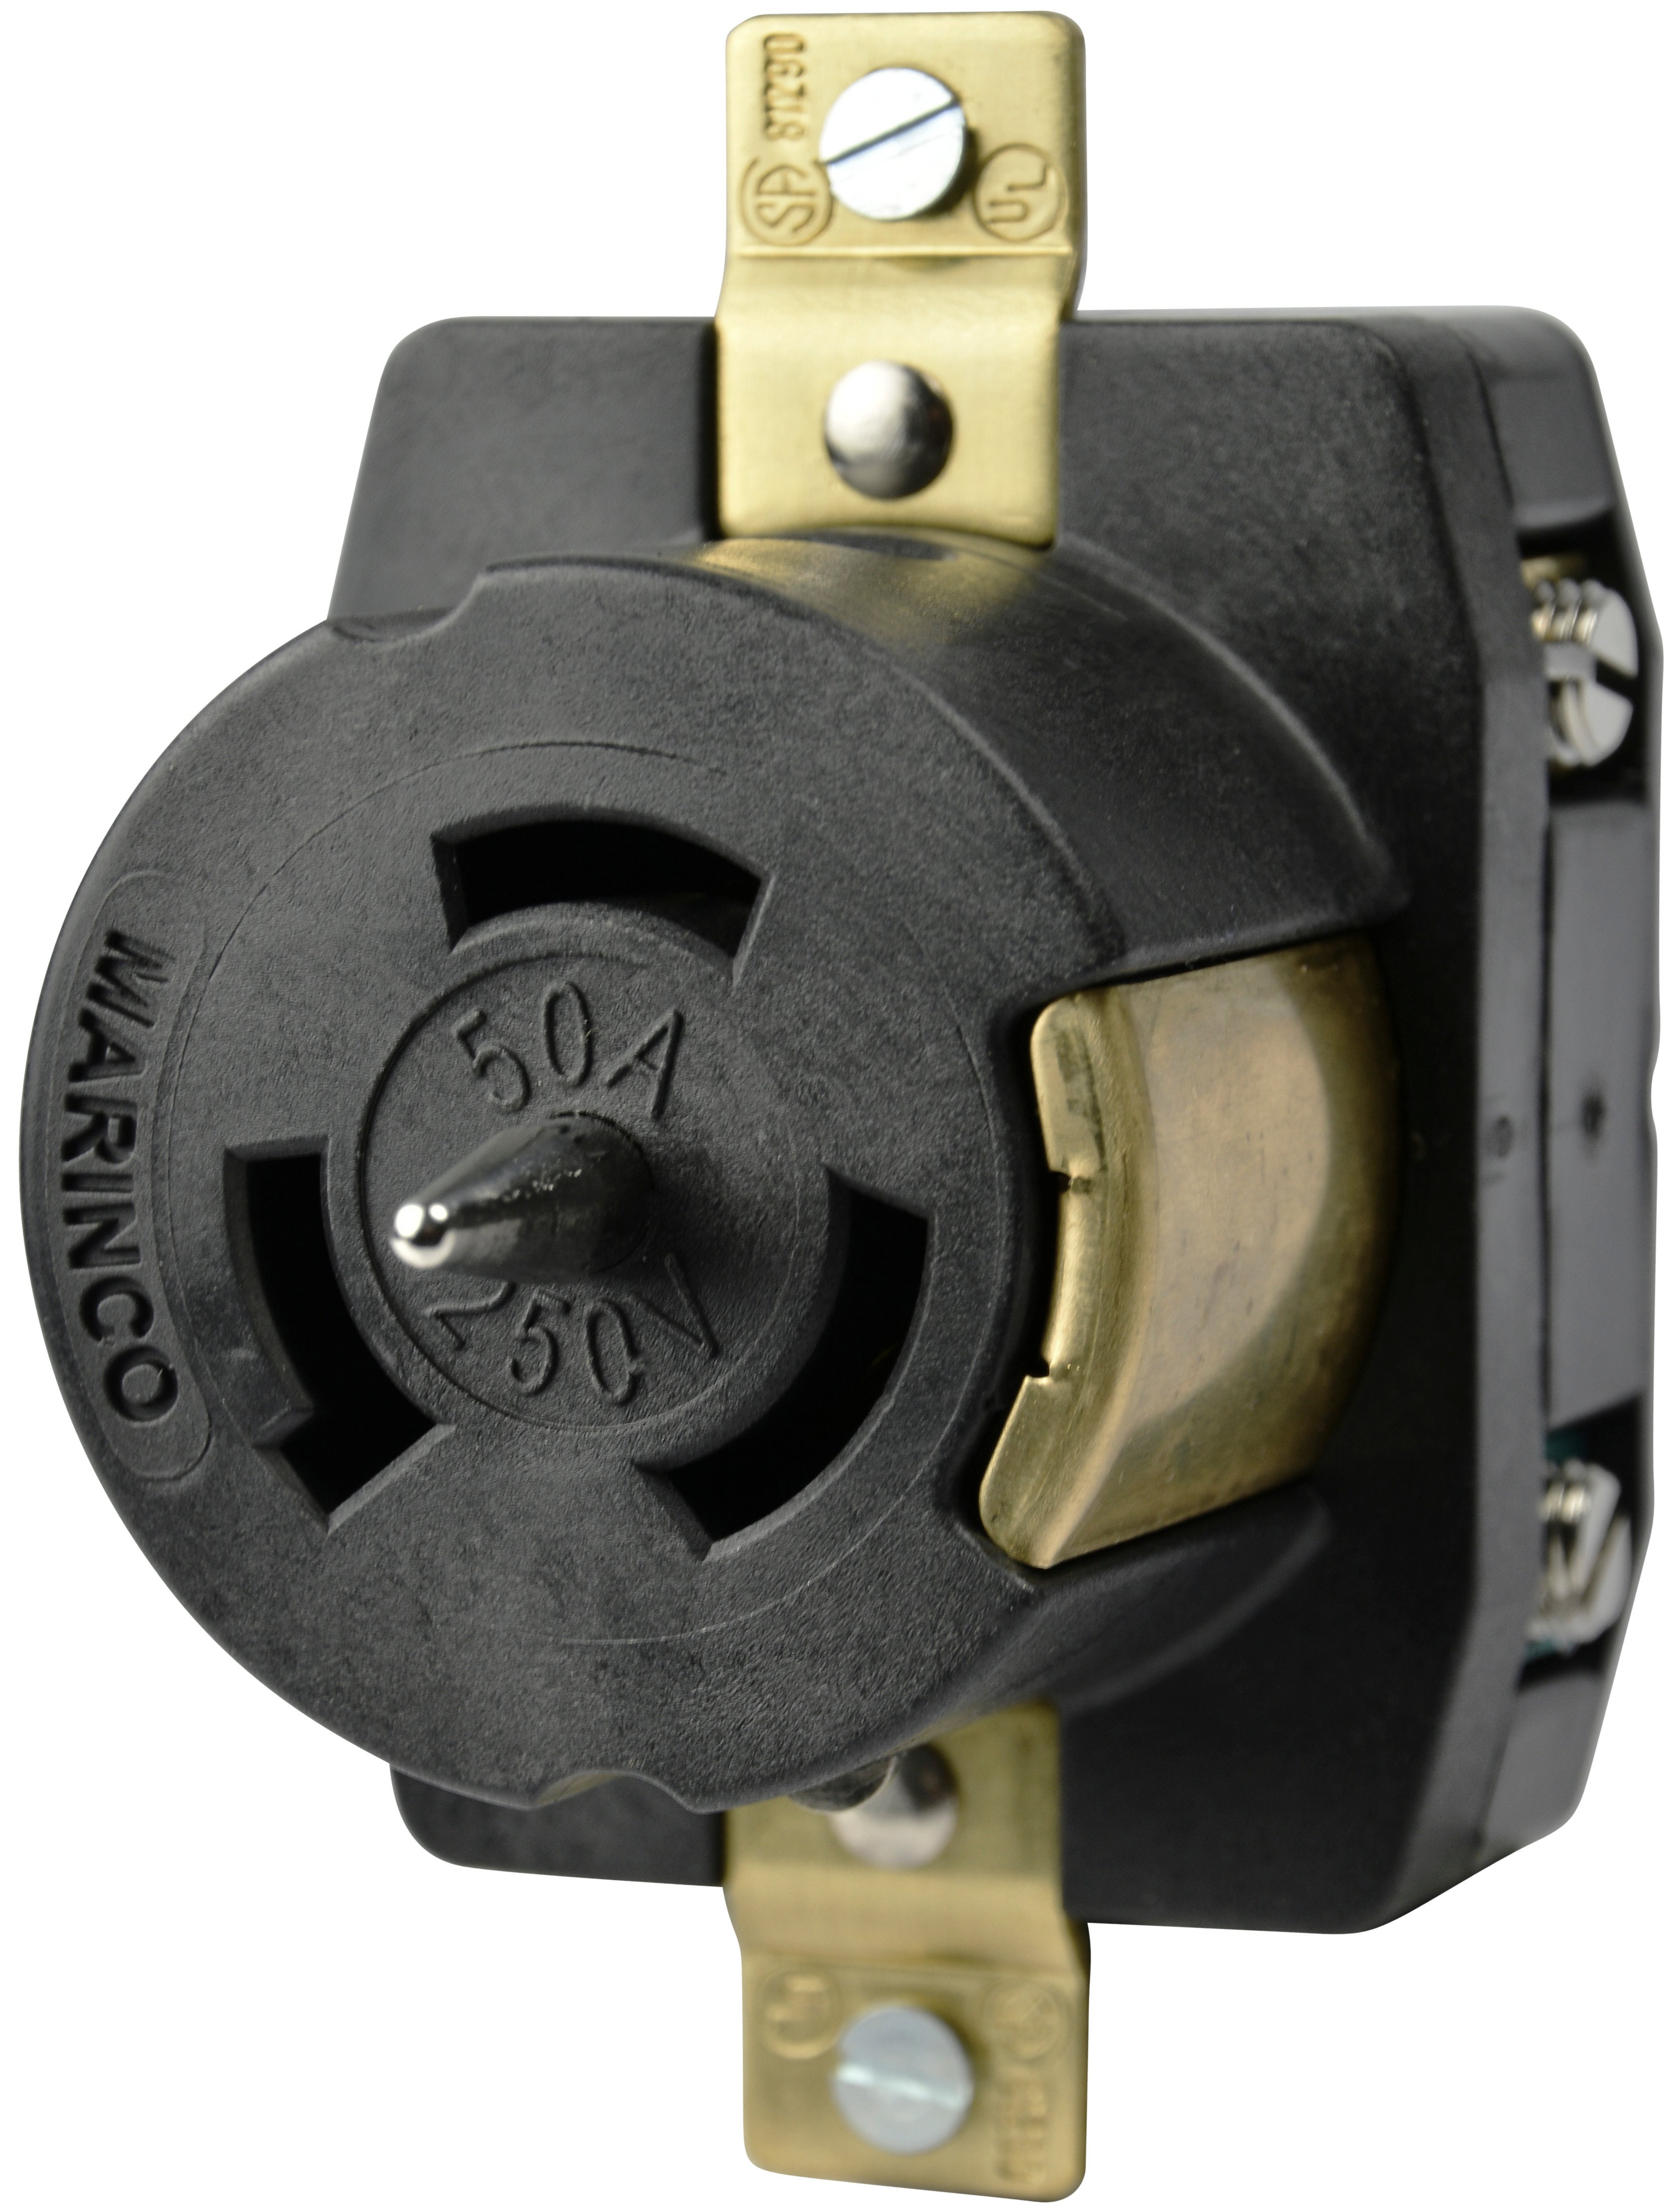 50A 250V 2P3W Locking Receptacle